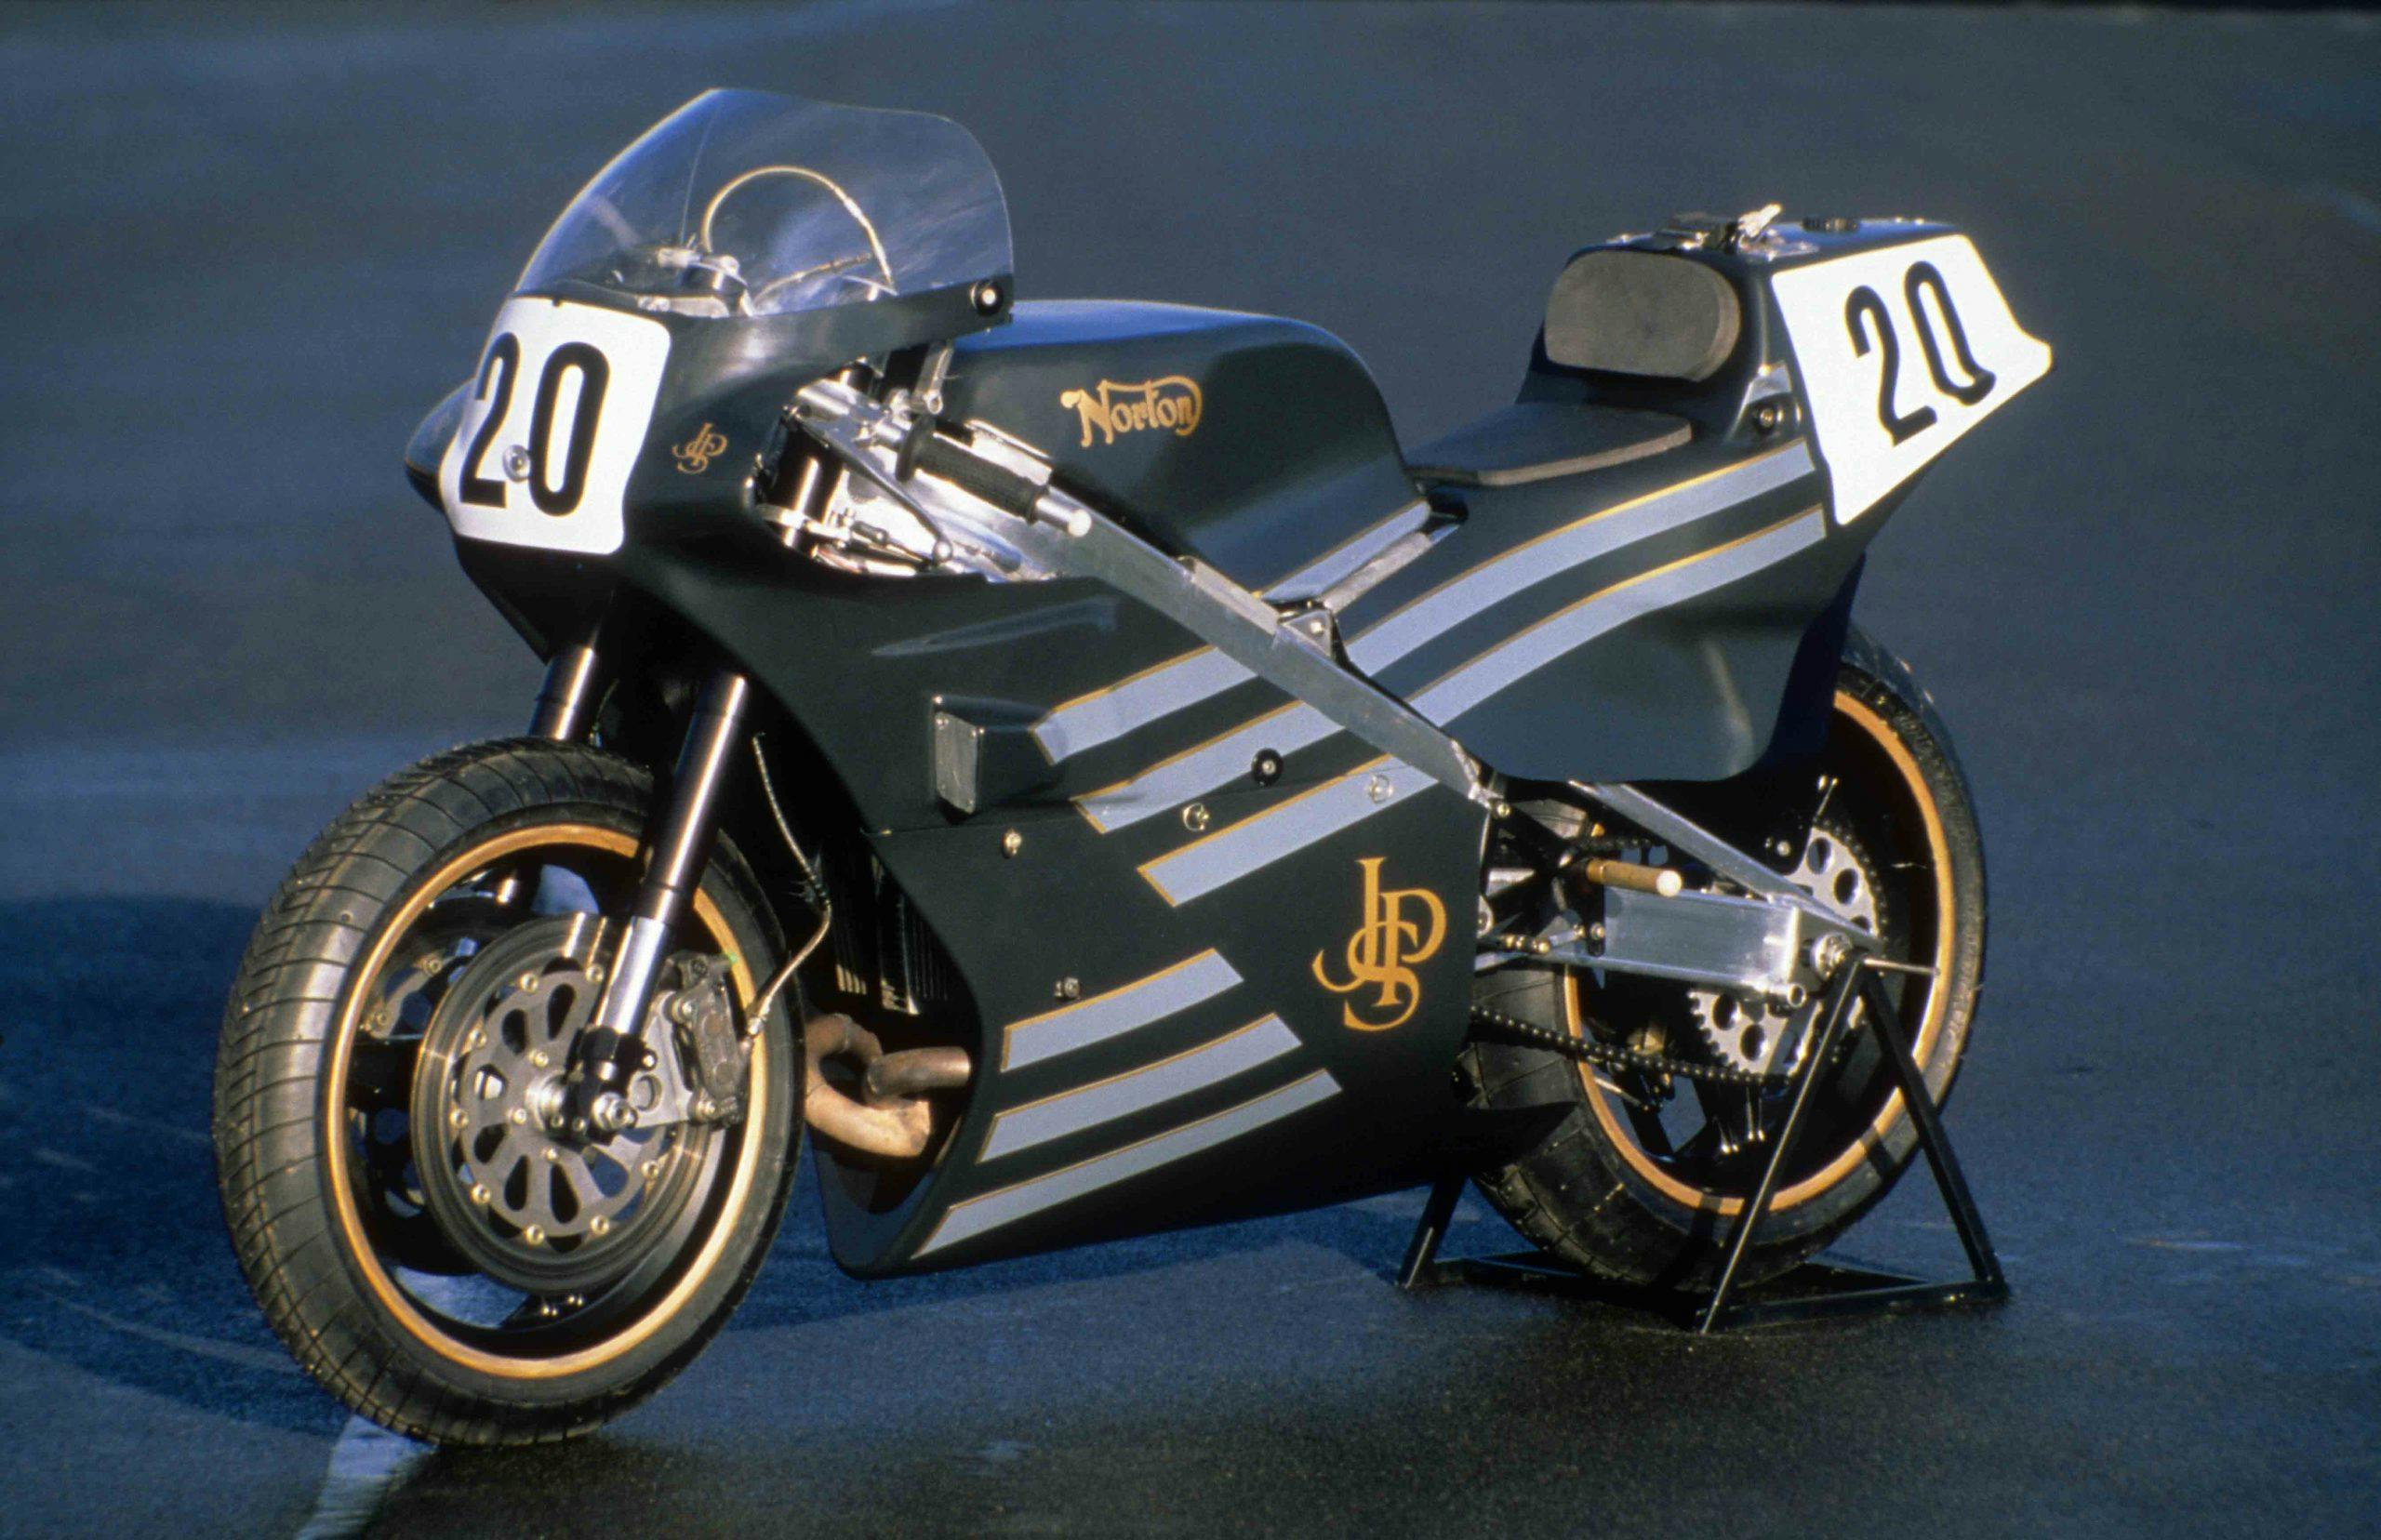 1989 Norton 588 racer motorcycle front three quarter